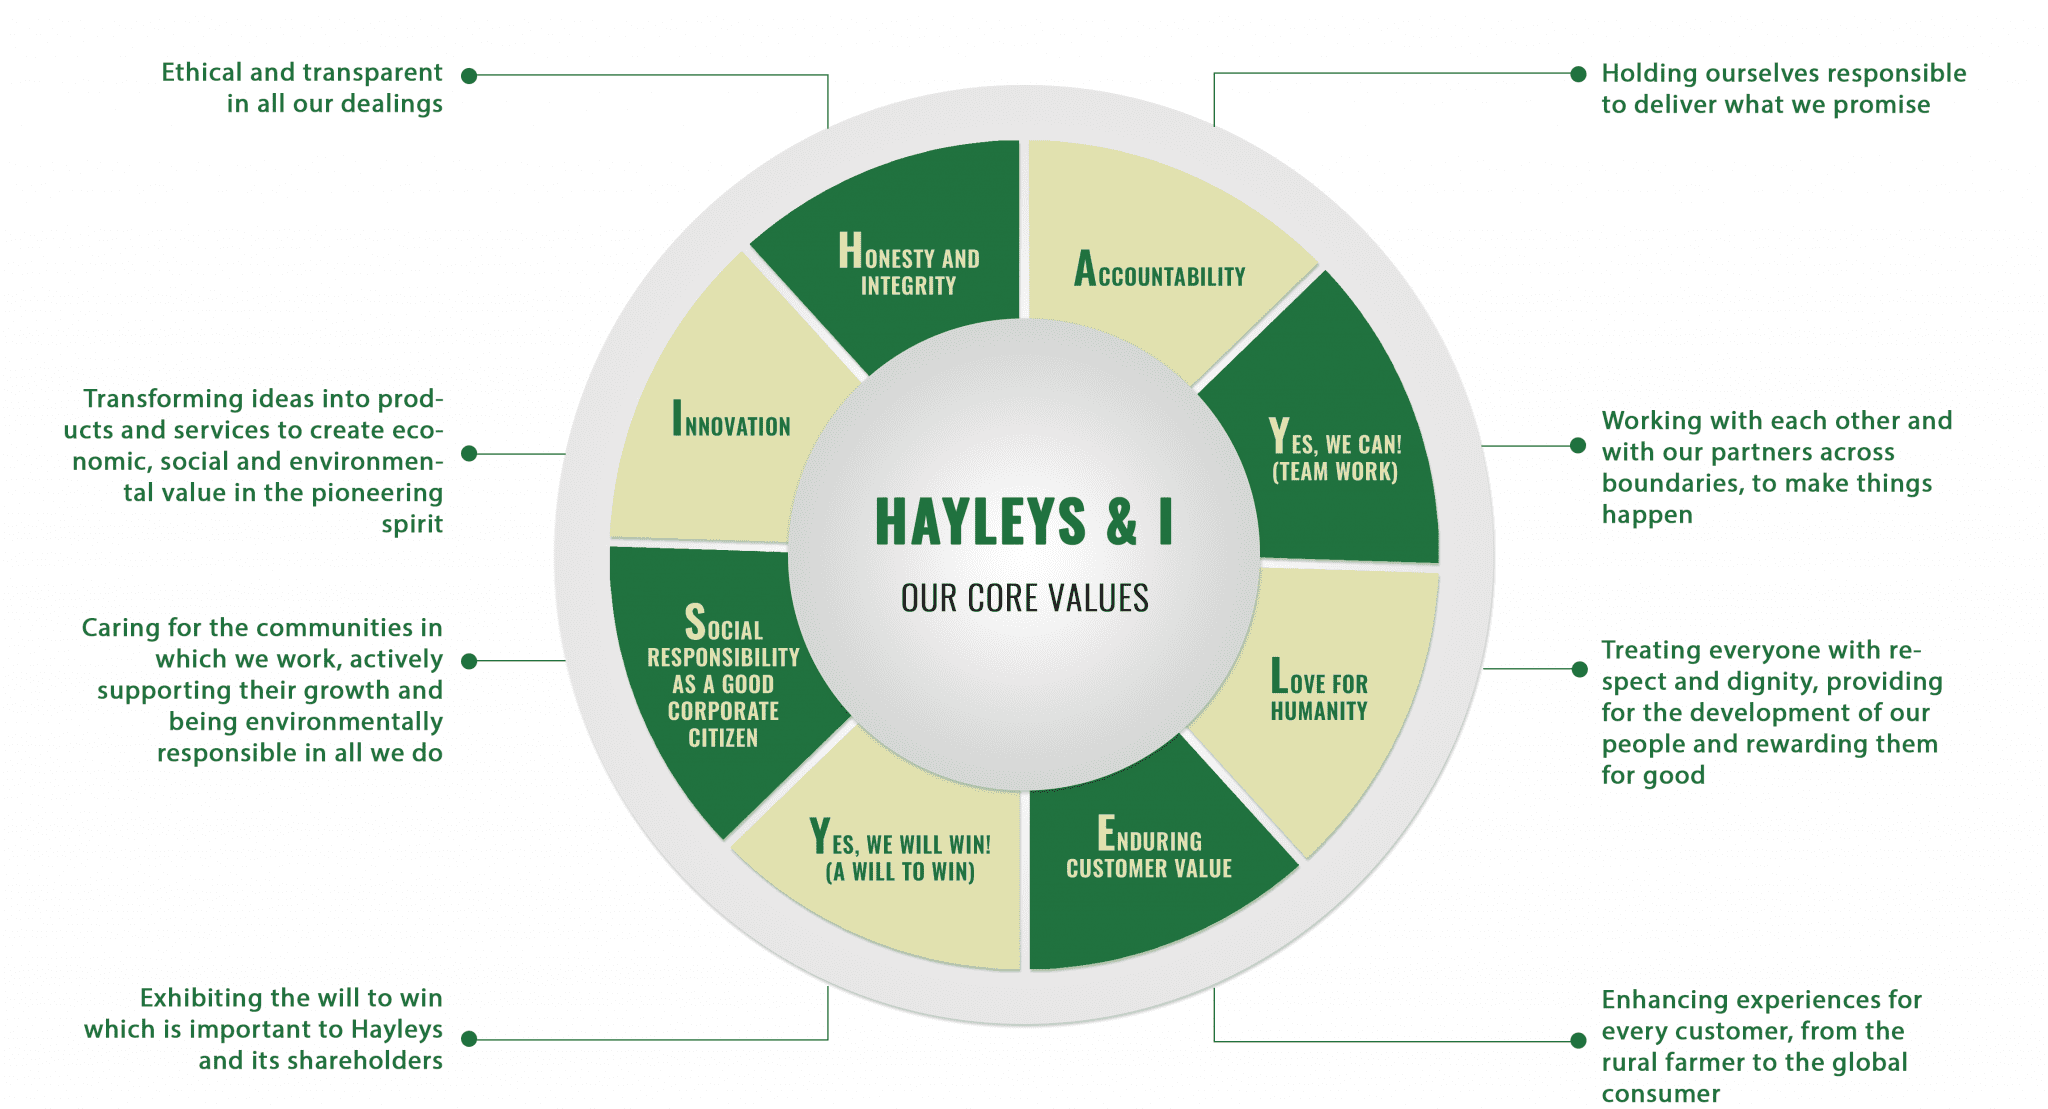 Hayley Size Chart